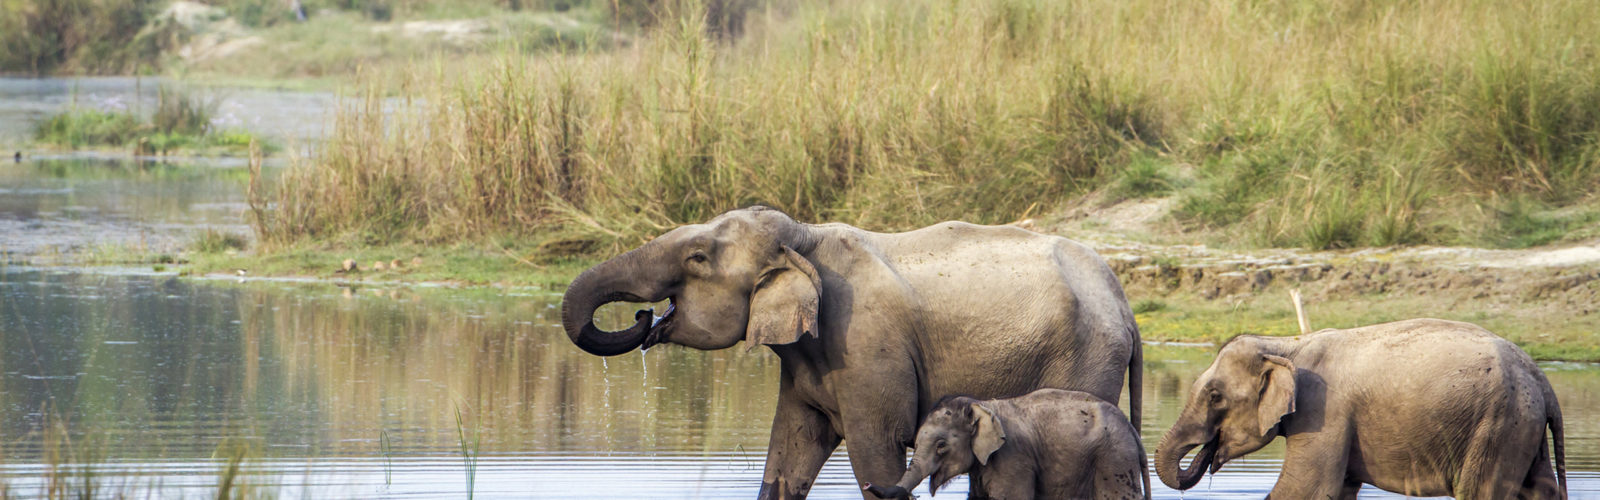 bardia-national-park-nepal-elephants